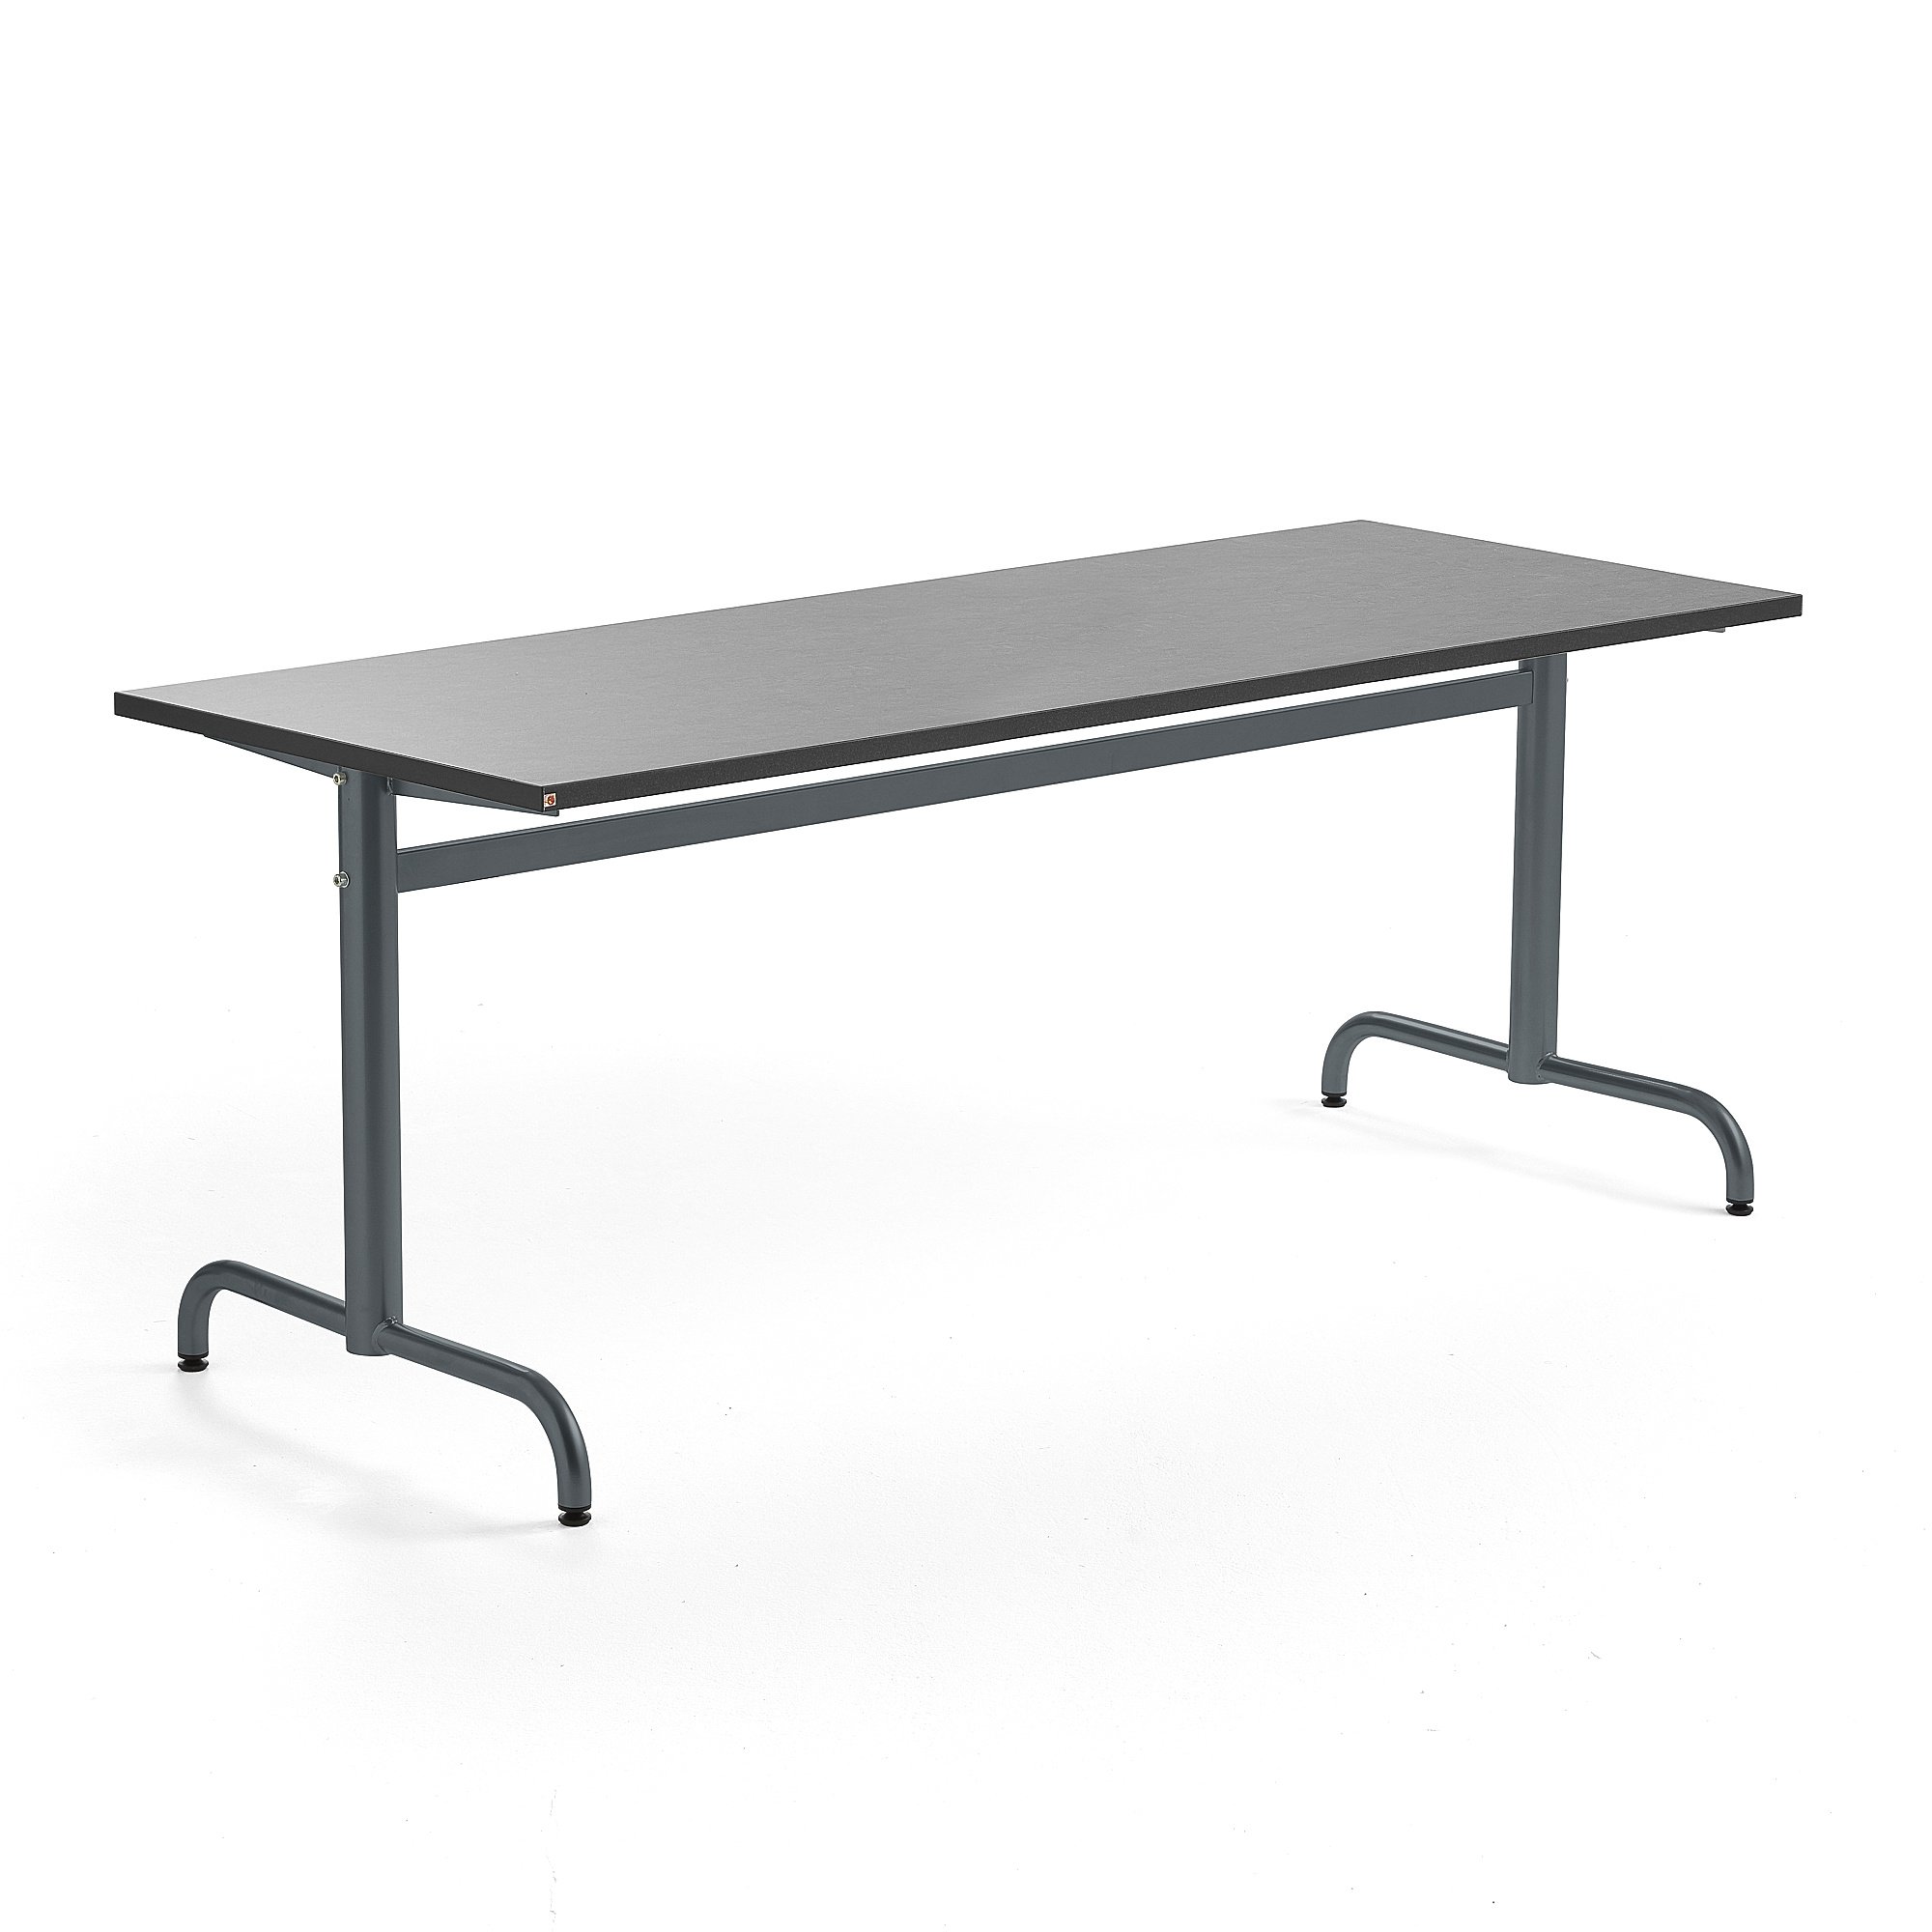 Stůl PLURAL, 1800x700x720 mm, linoleum, tmavě šedá, antracitově šedá